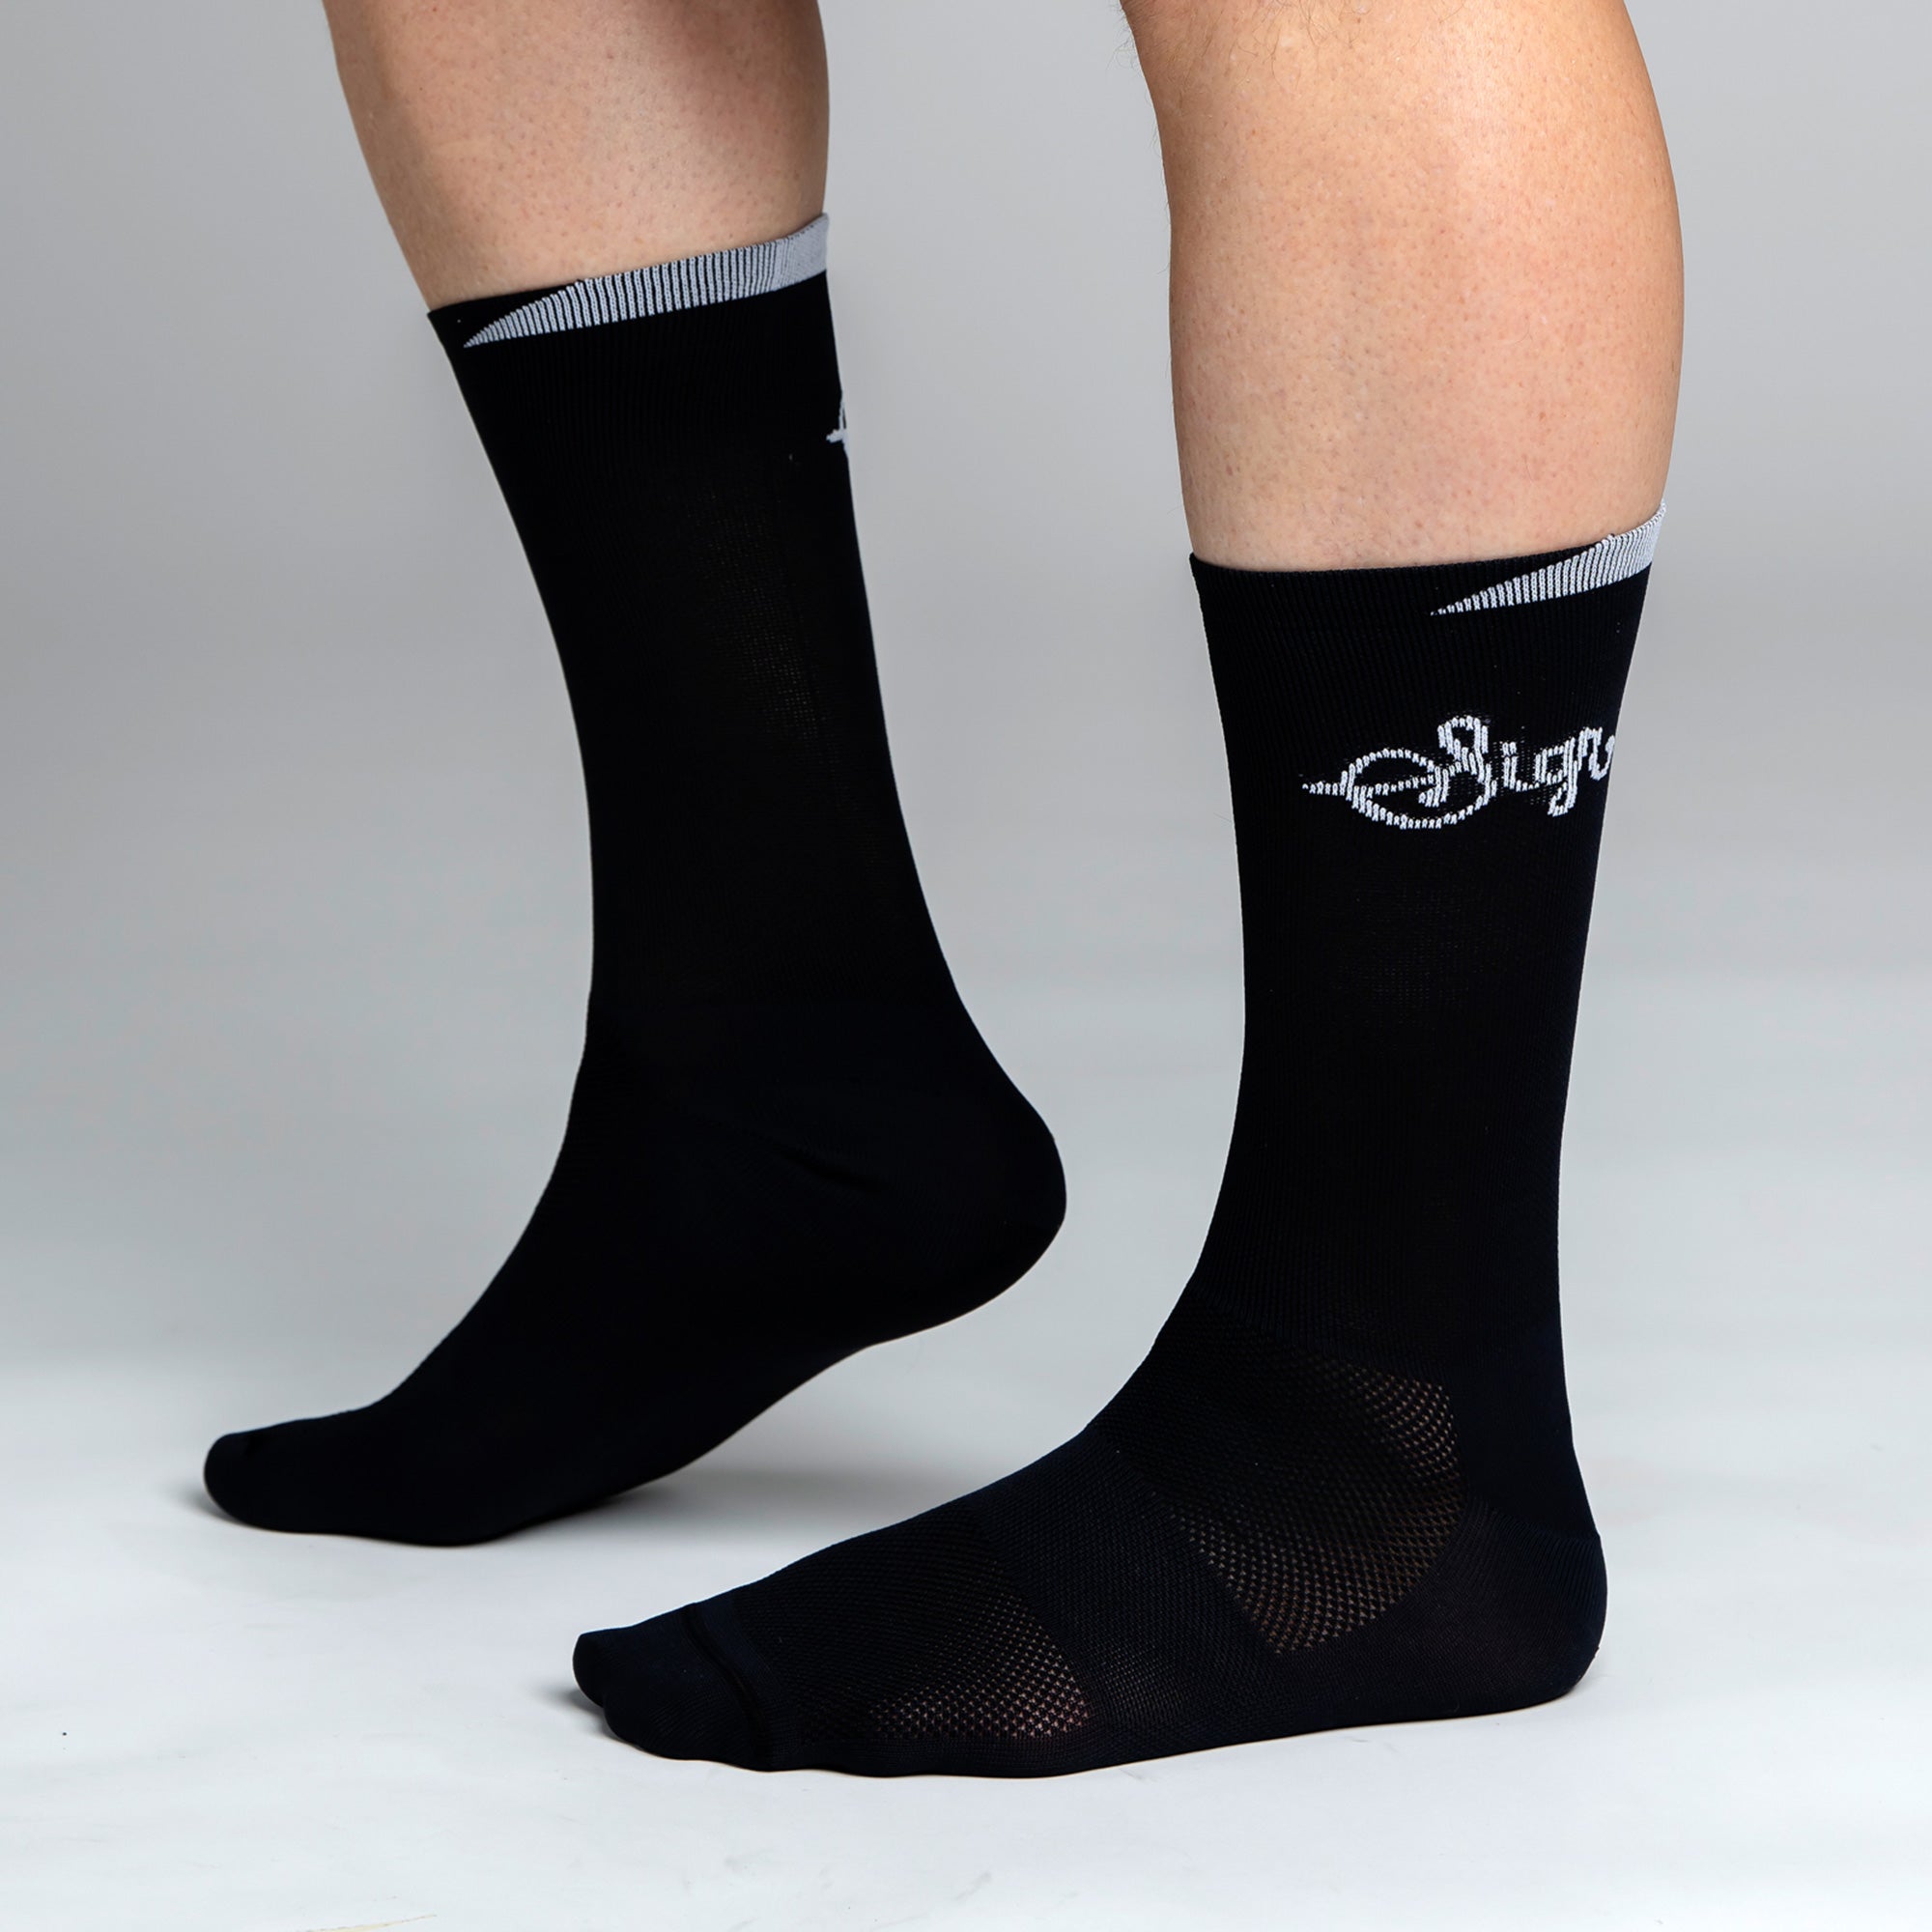 Snok - Black Road Cycling Socks for Men - Pack of 2 pairs